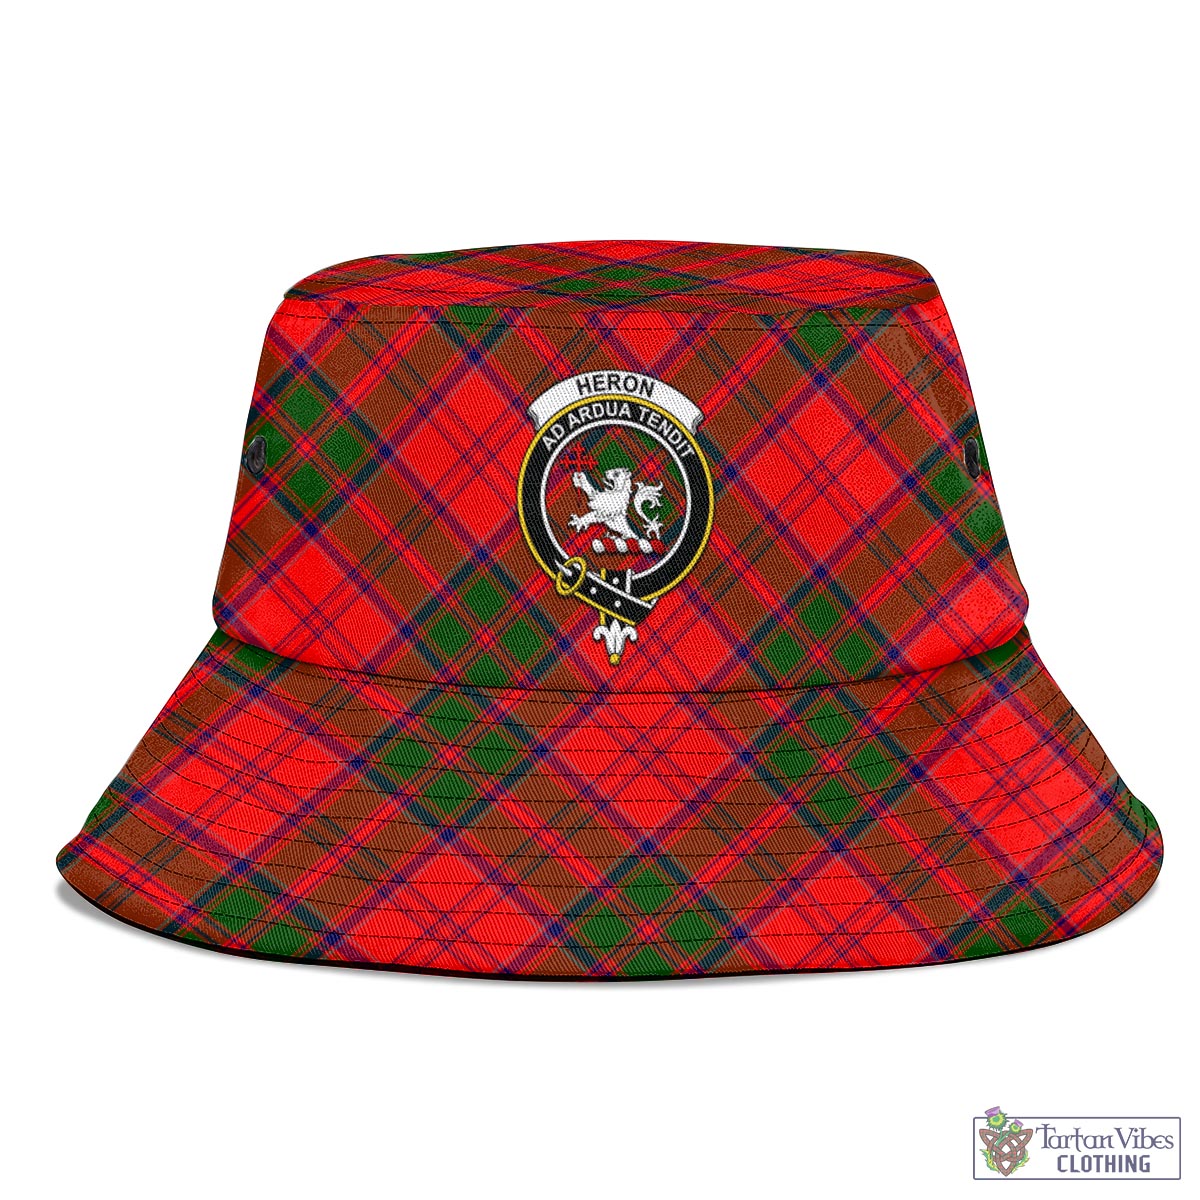 Tartan Vibes Clothing Heron Tartan Bucket Hat with Family Crest